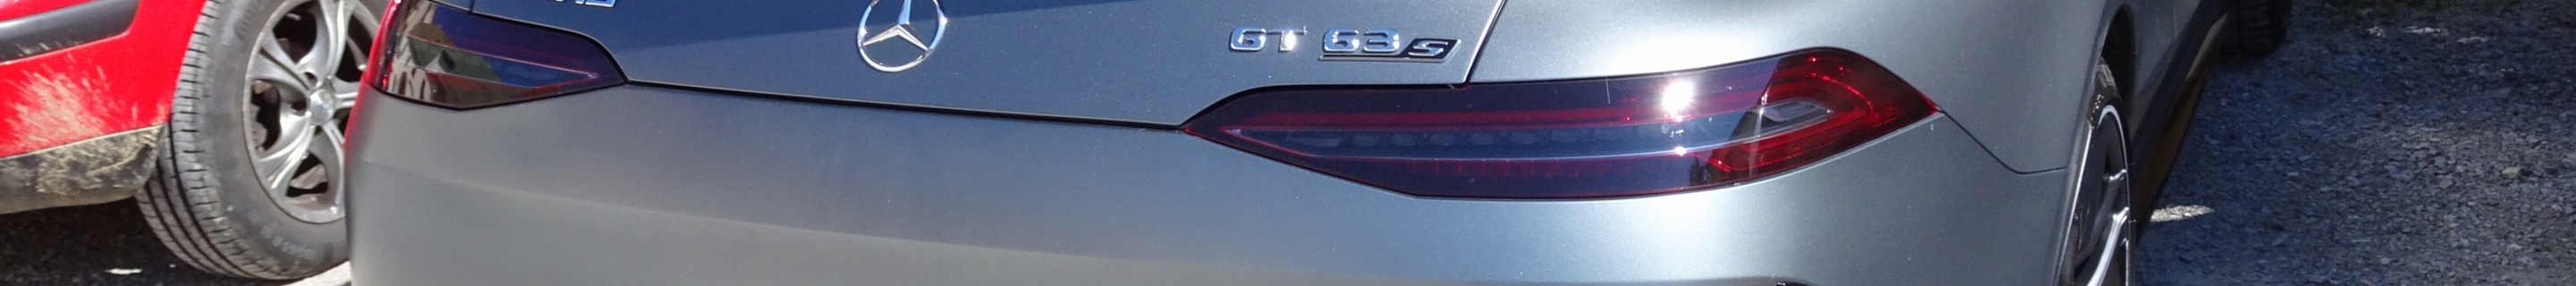 Mercedes-AMG GT 63 S Edition 1 X290